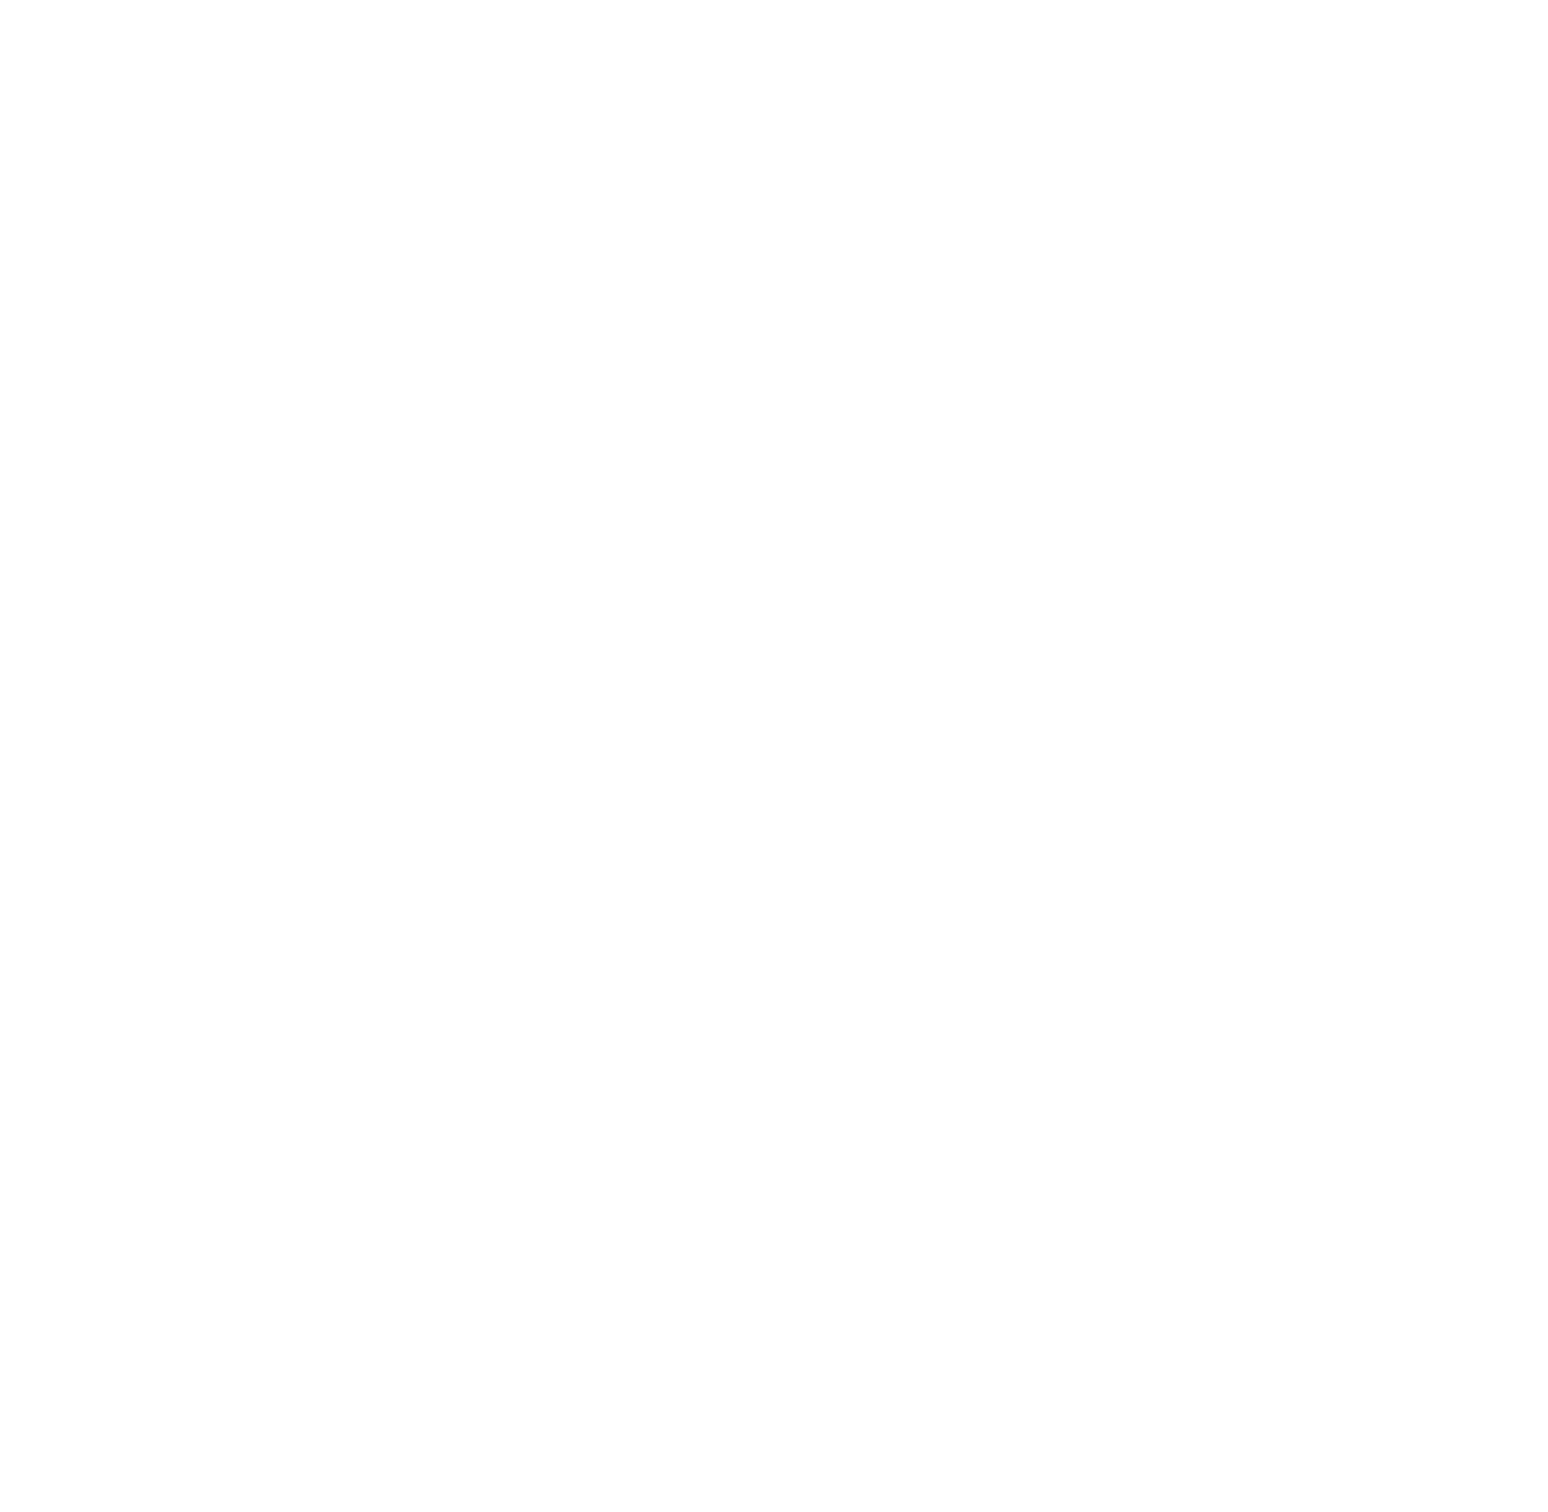 Frontdoor logo for dark backgrounds (transparent PNG)